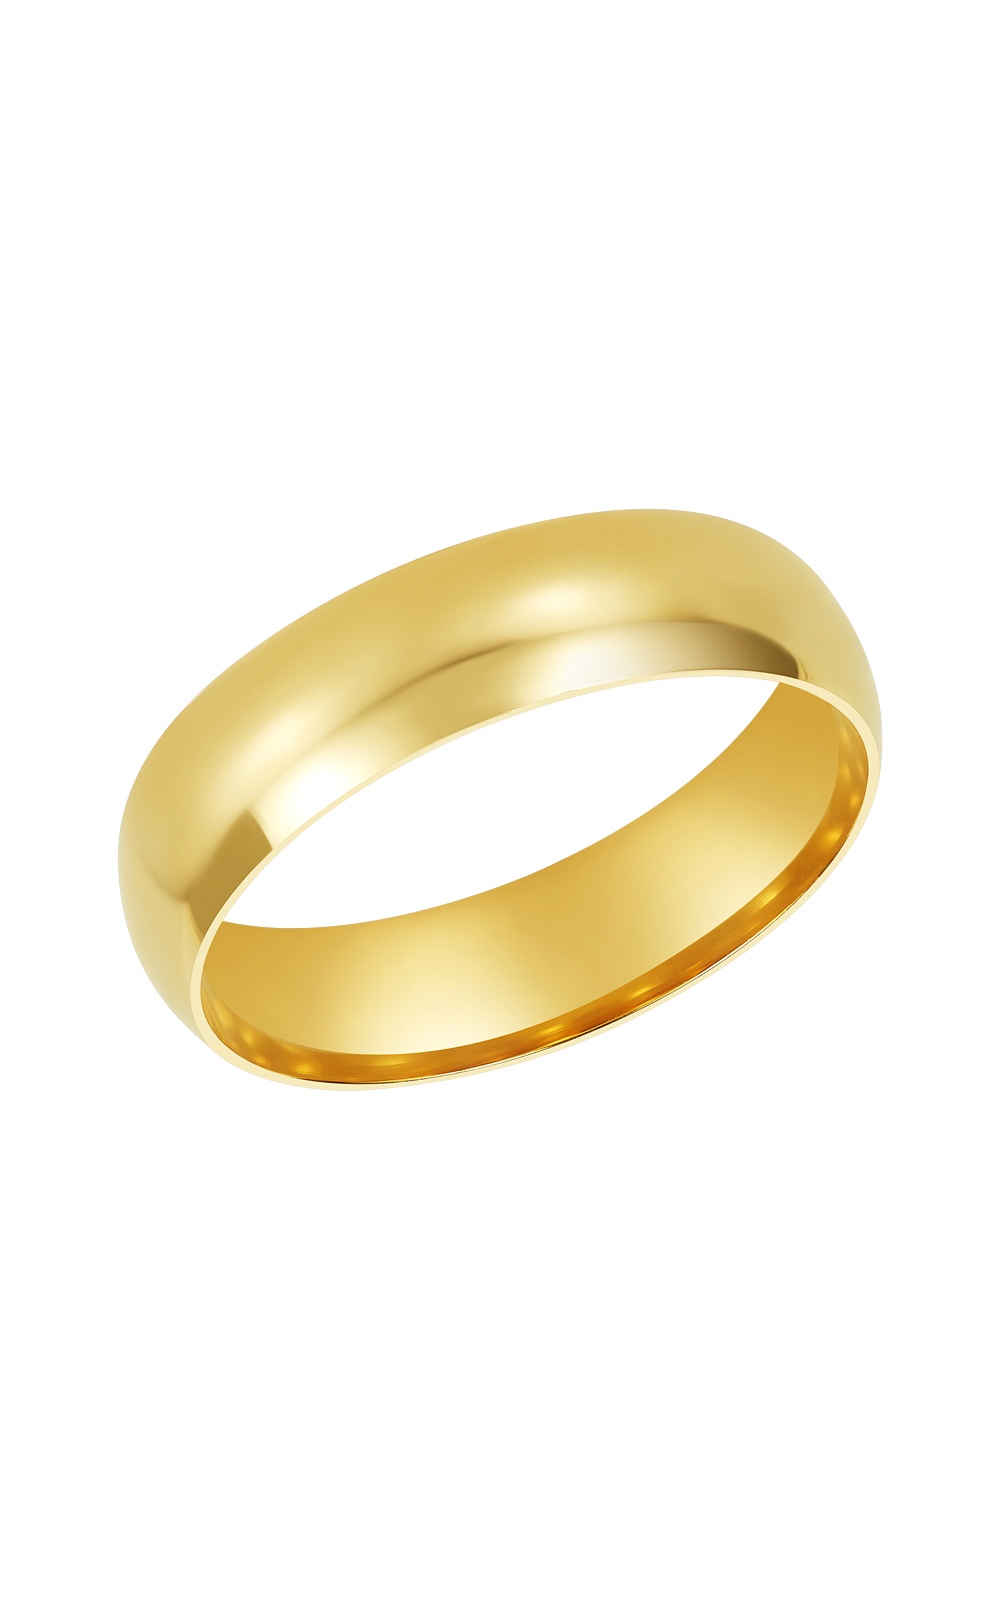 9ct gold 4mm matte finish flat court ring | RUST jewellery